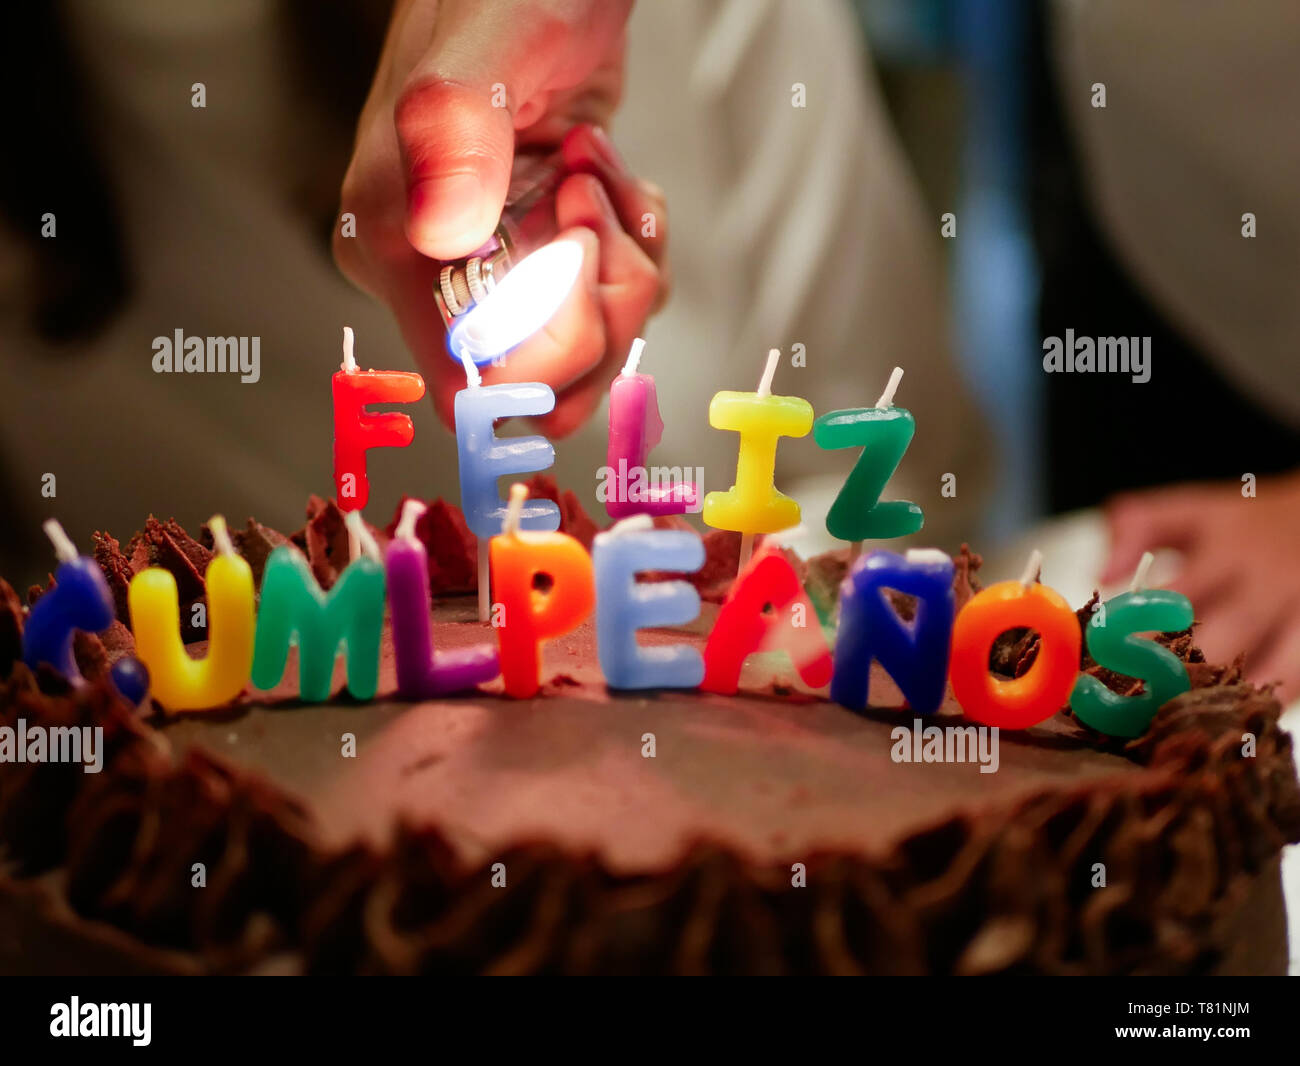 Feliz Cumpleaños Images – Browse 631 Stock Photos, Vectors, and Video